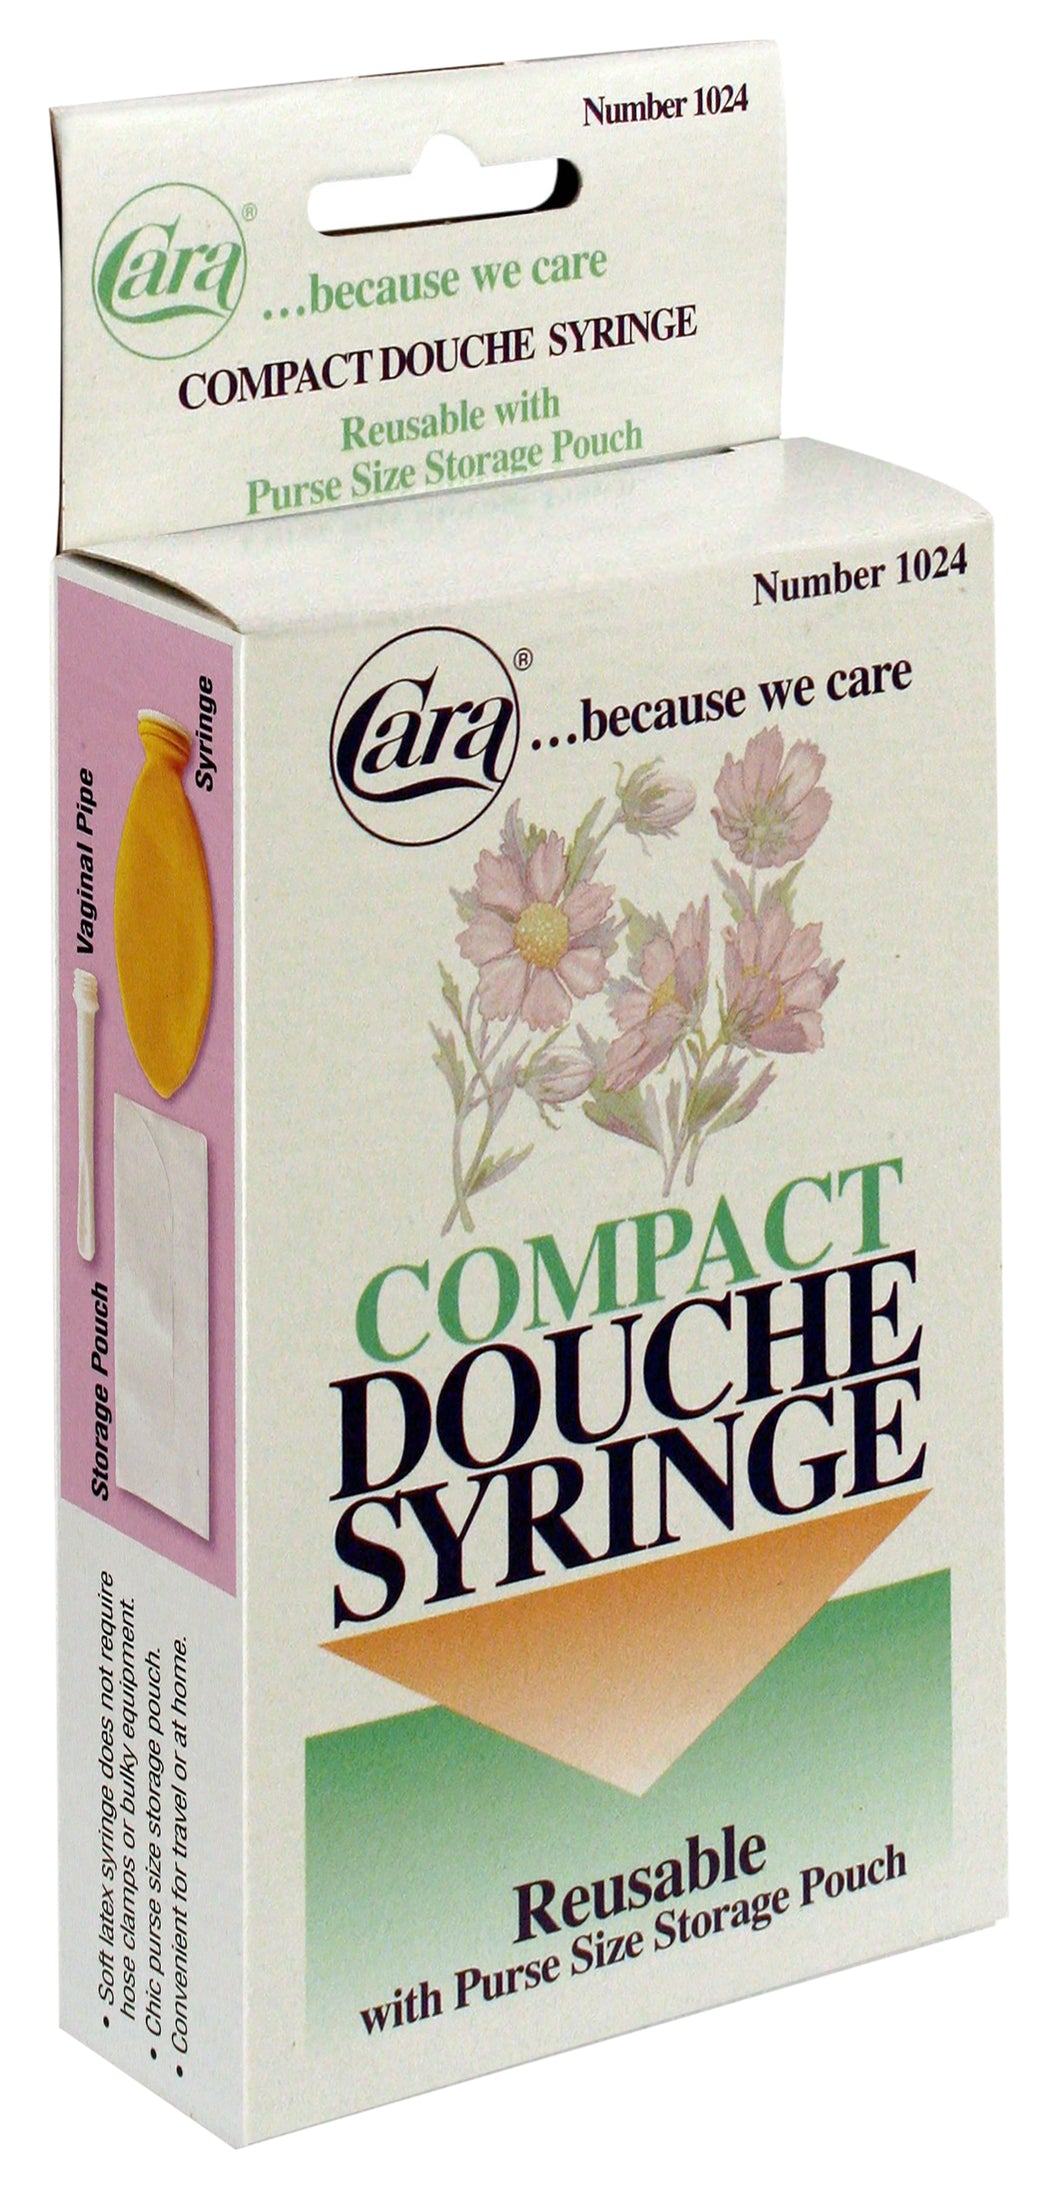 Model 24 - Compact Feminine Douche Syringe